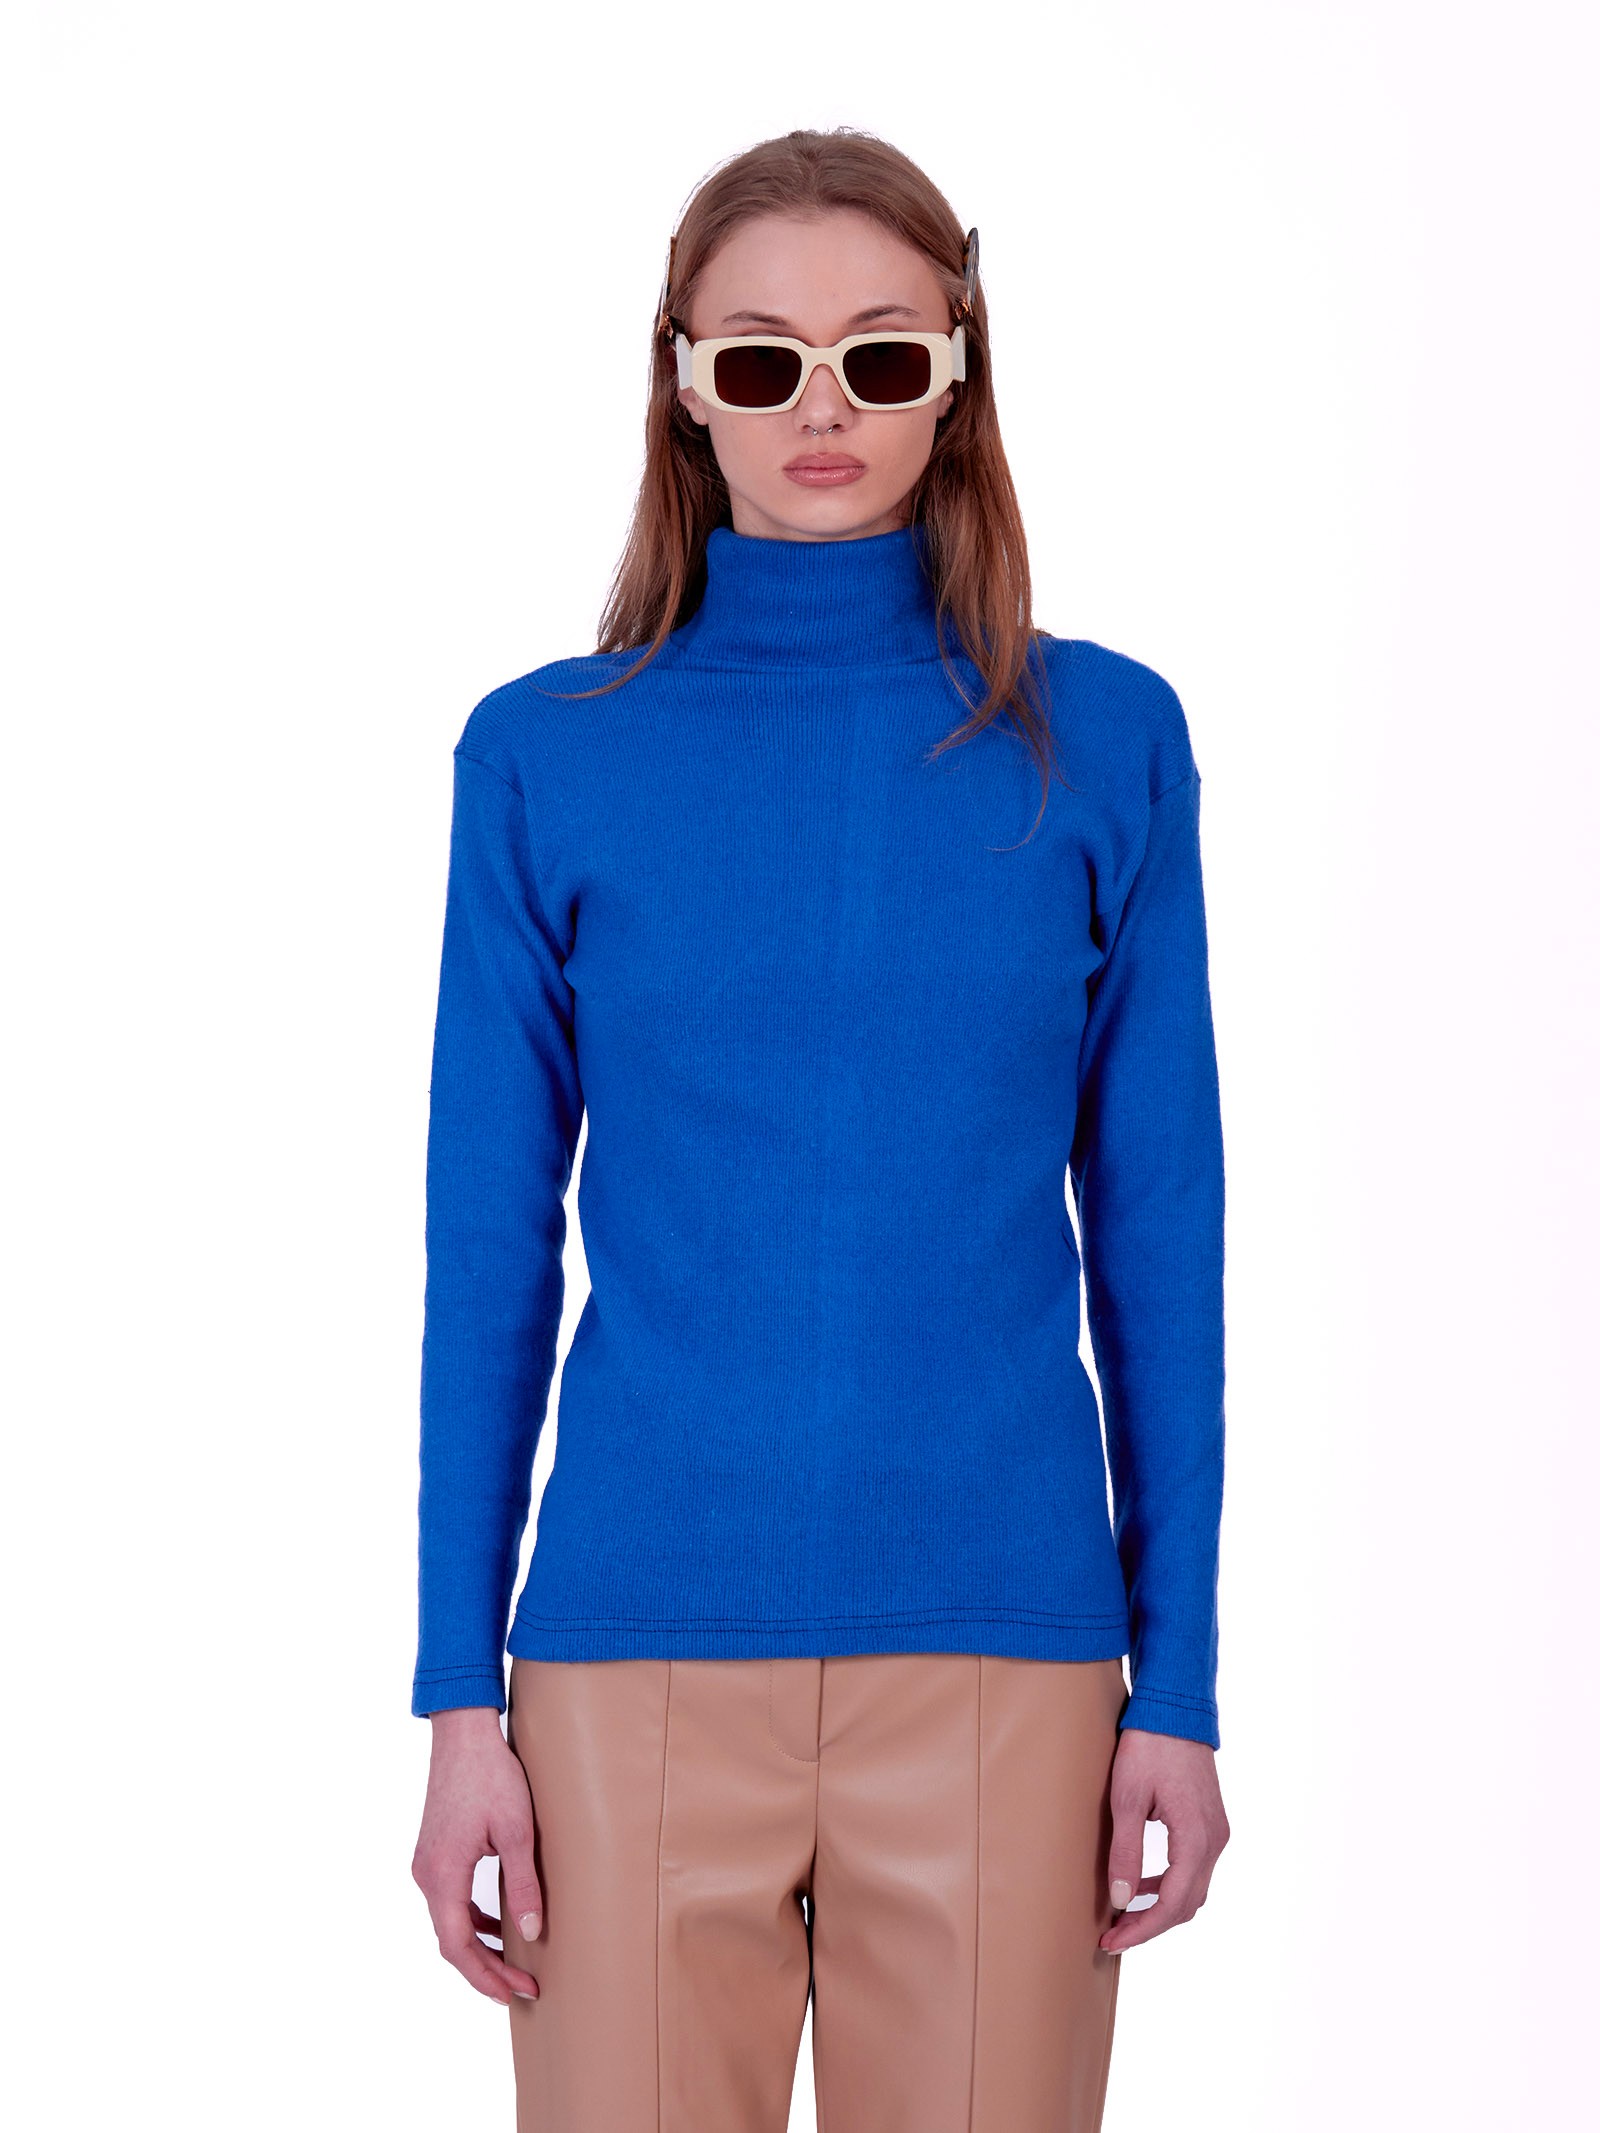 Unisex turtleneck Sweater Blue